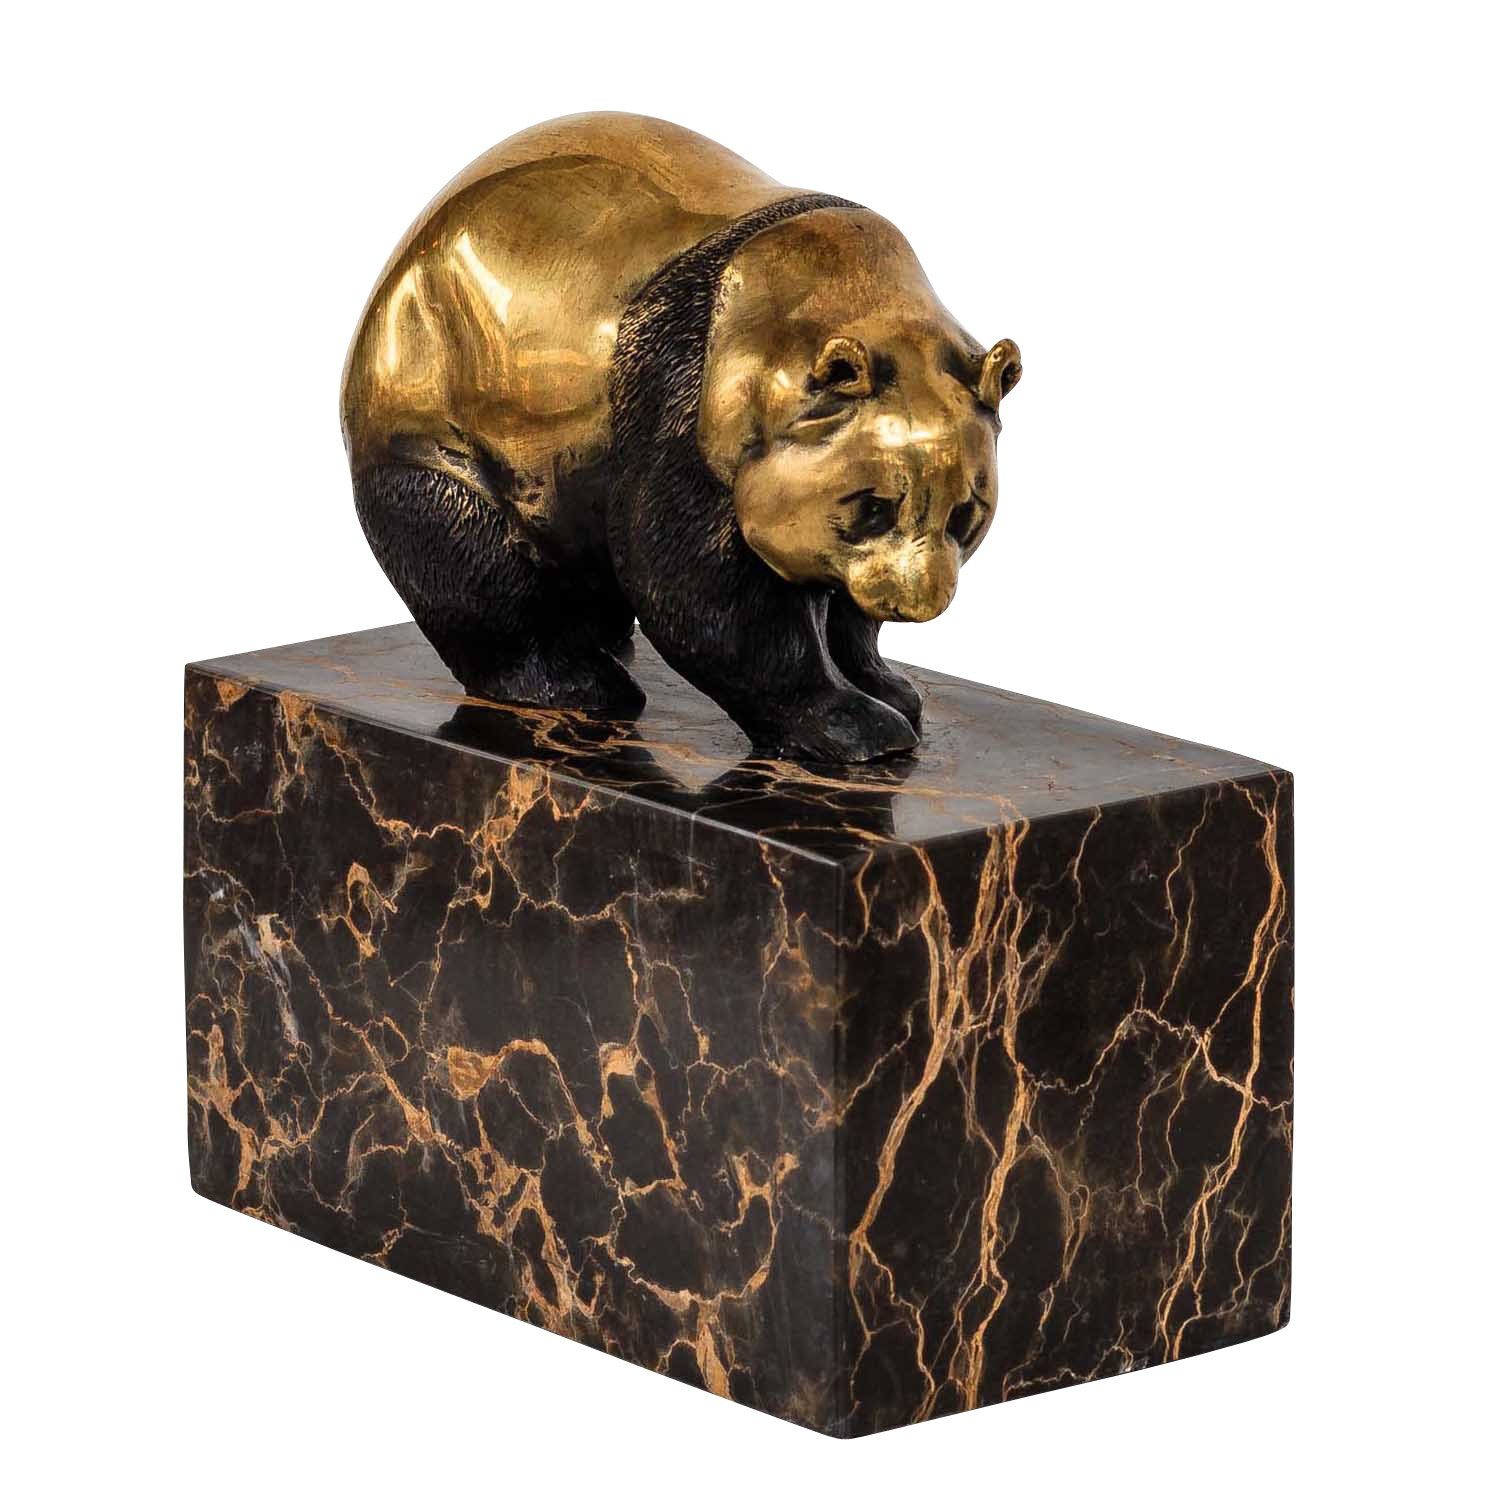 Aubaho Skulptur Bronzeskulptur Panda im Antik-Stil Bronze Figur 15cm Pandabär Bronze